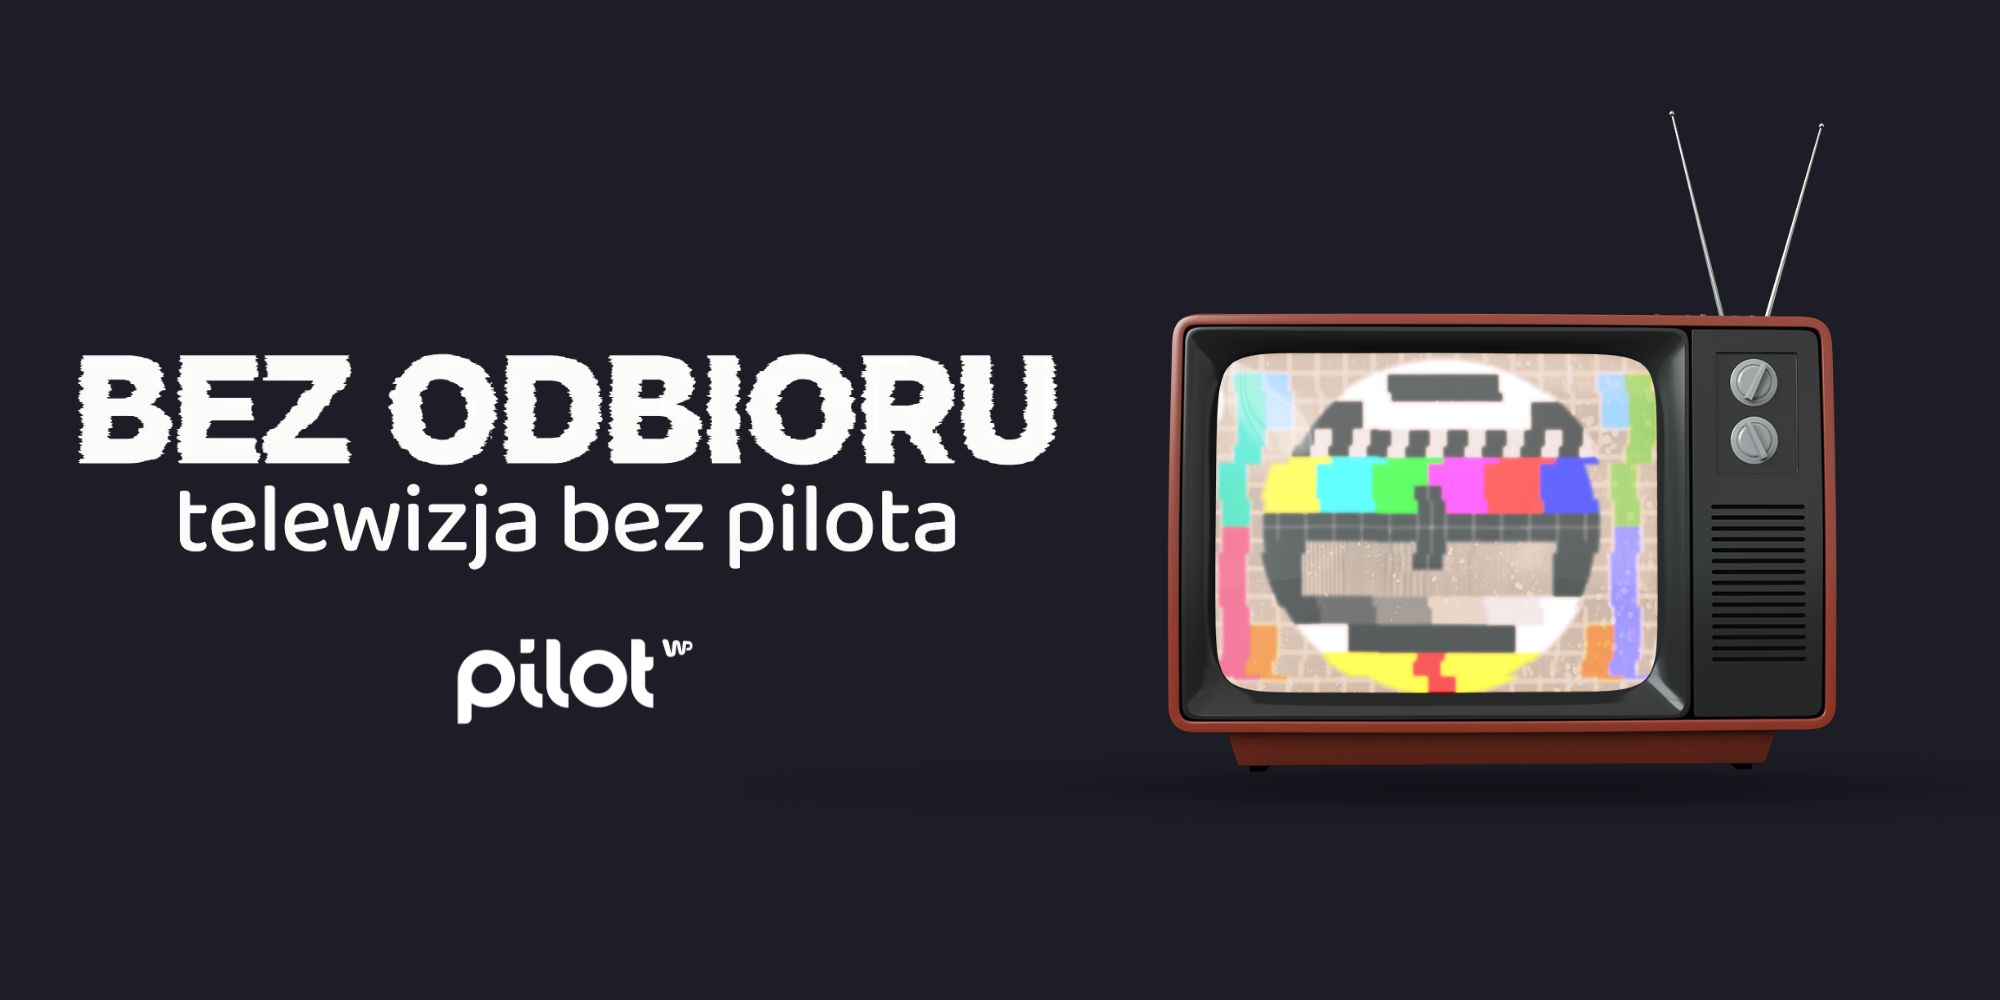 Bez Odbioru - telewizja bez pilota